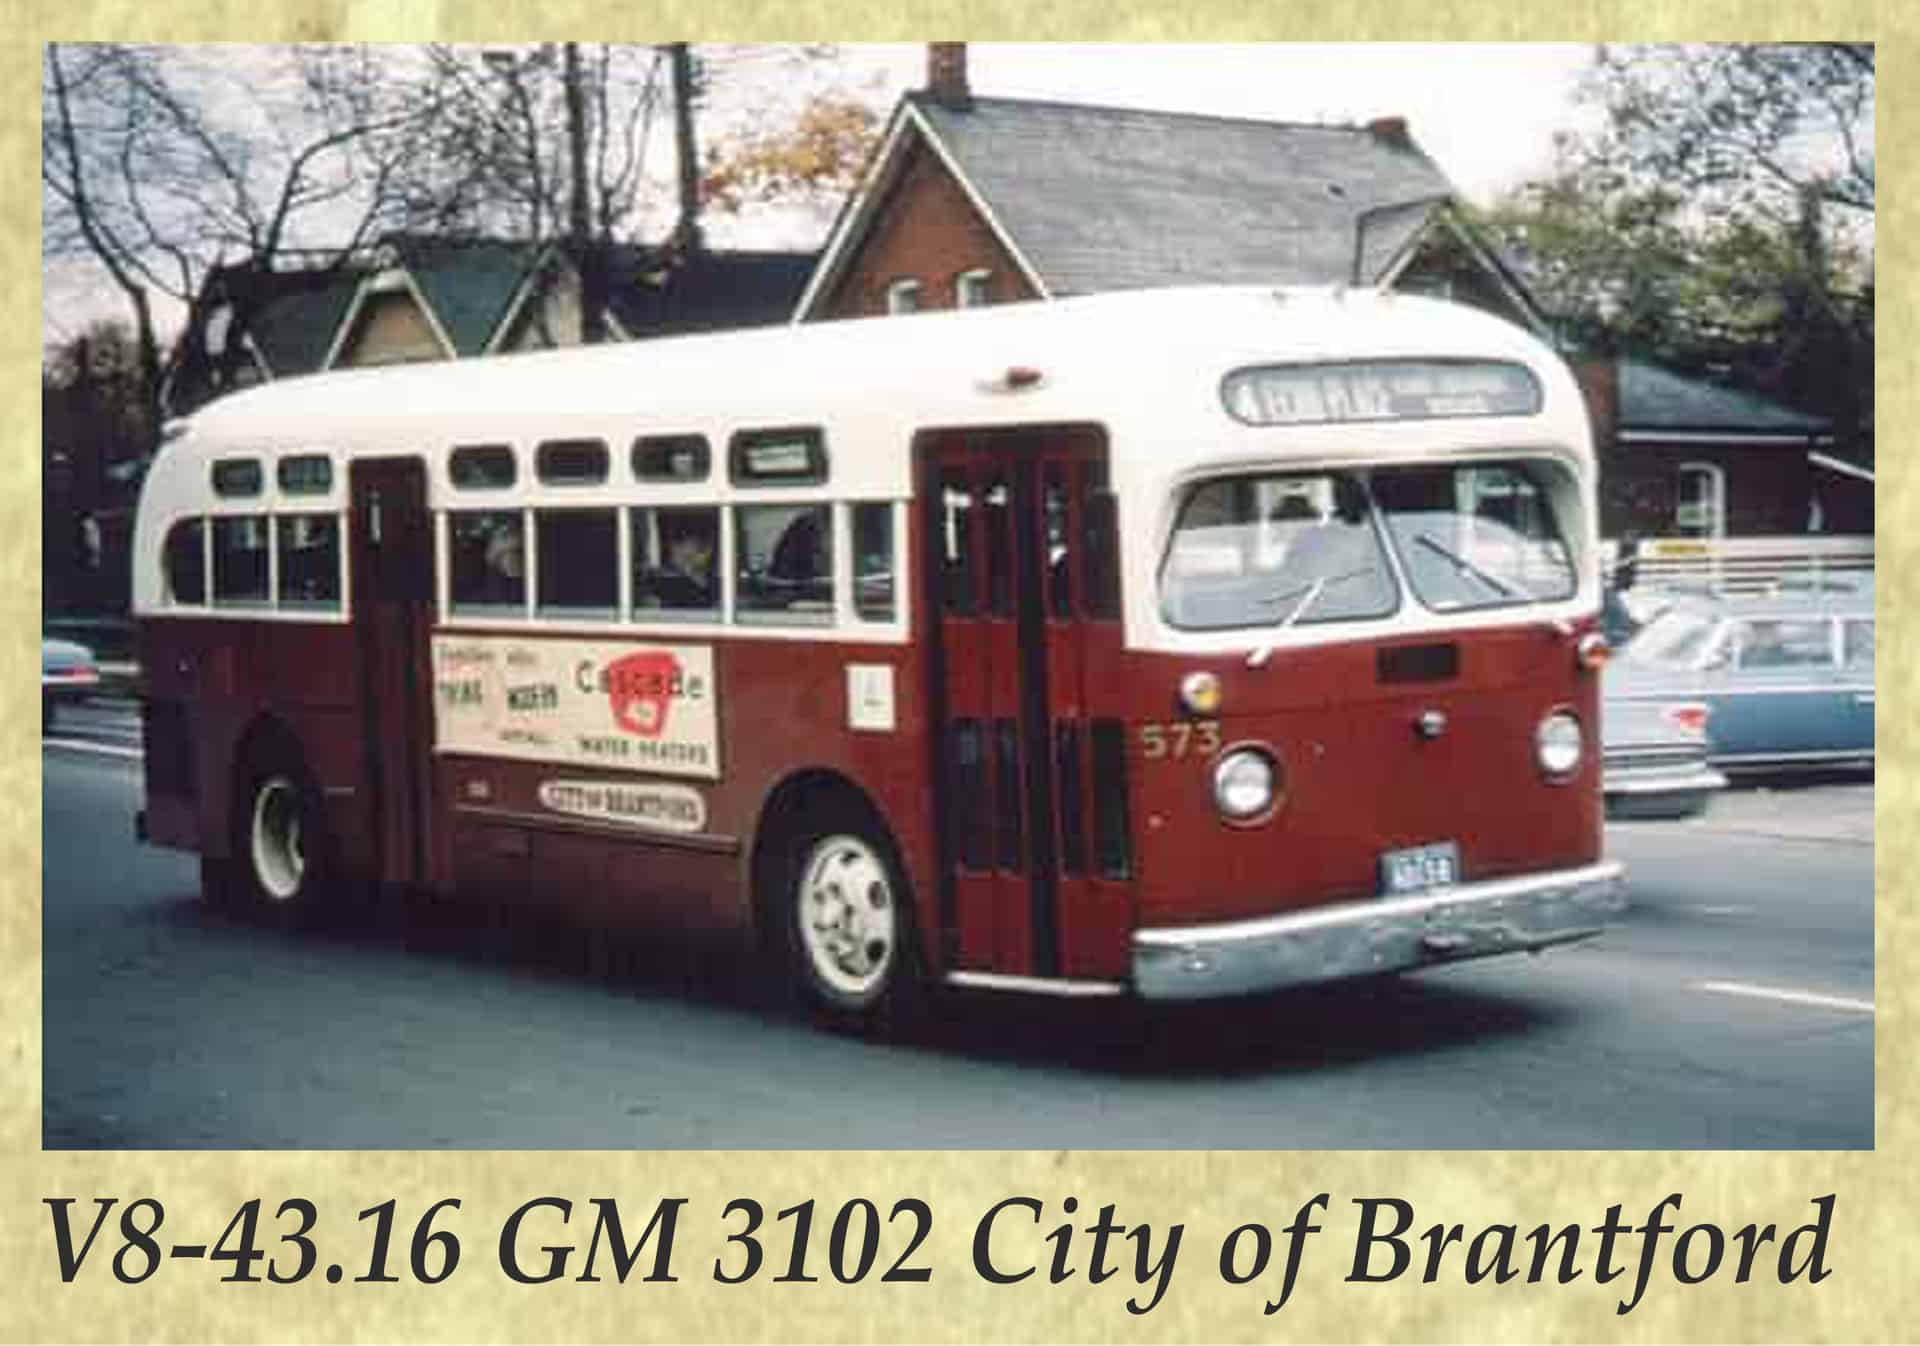 V8-43.16 GM 3102 City of Brantford